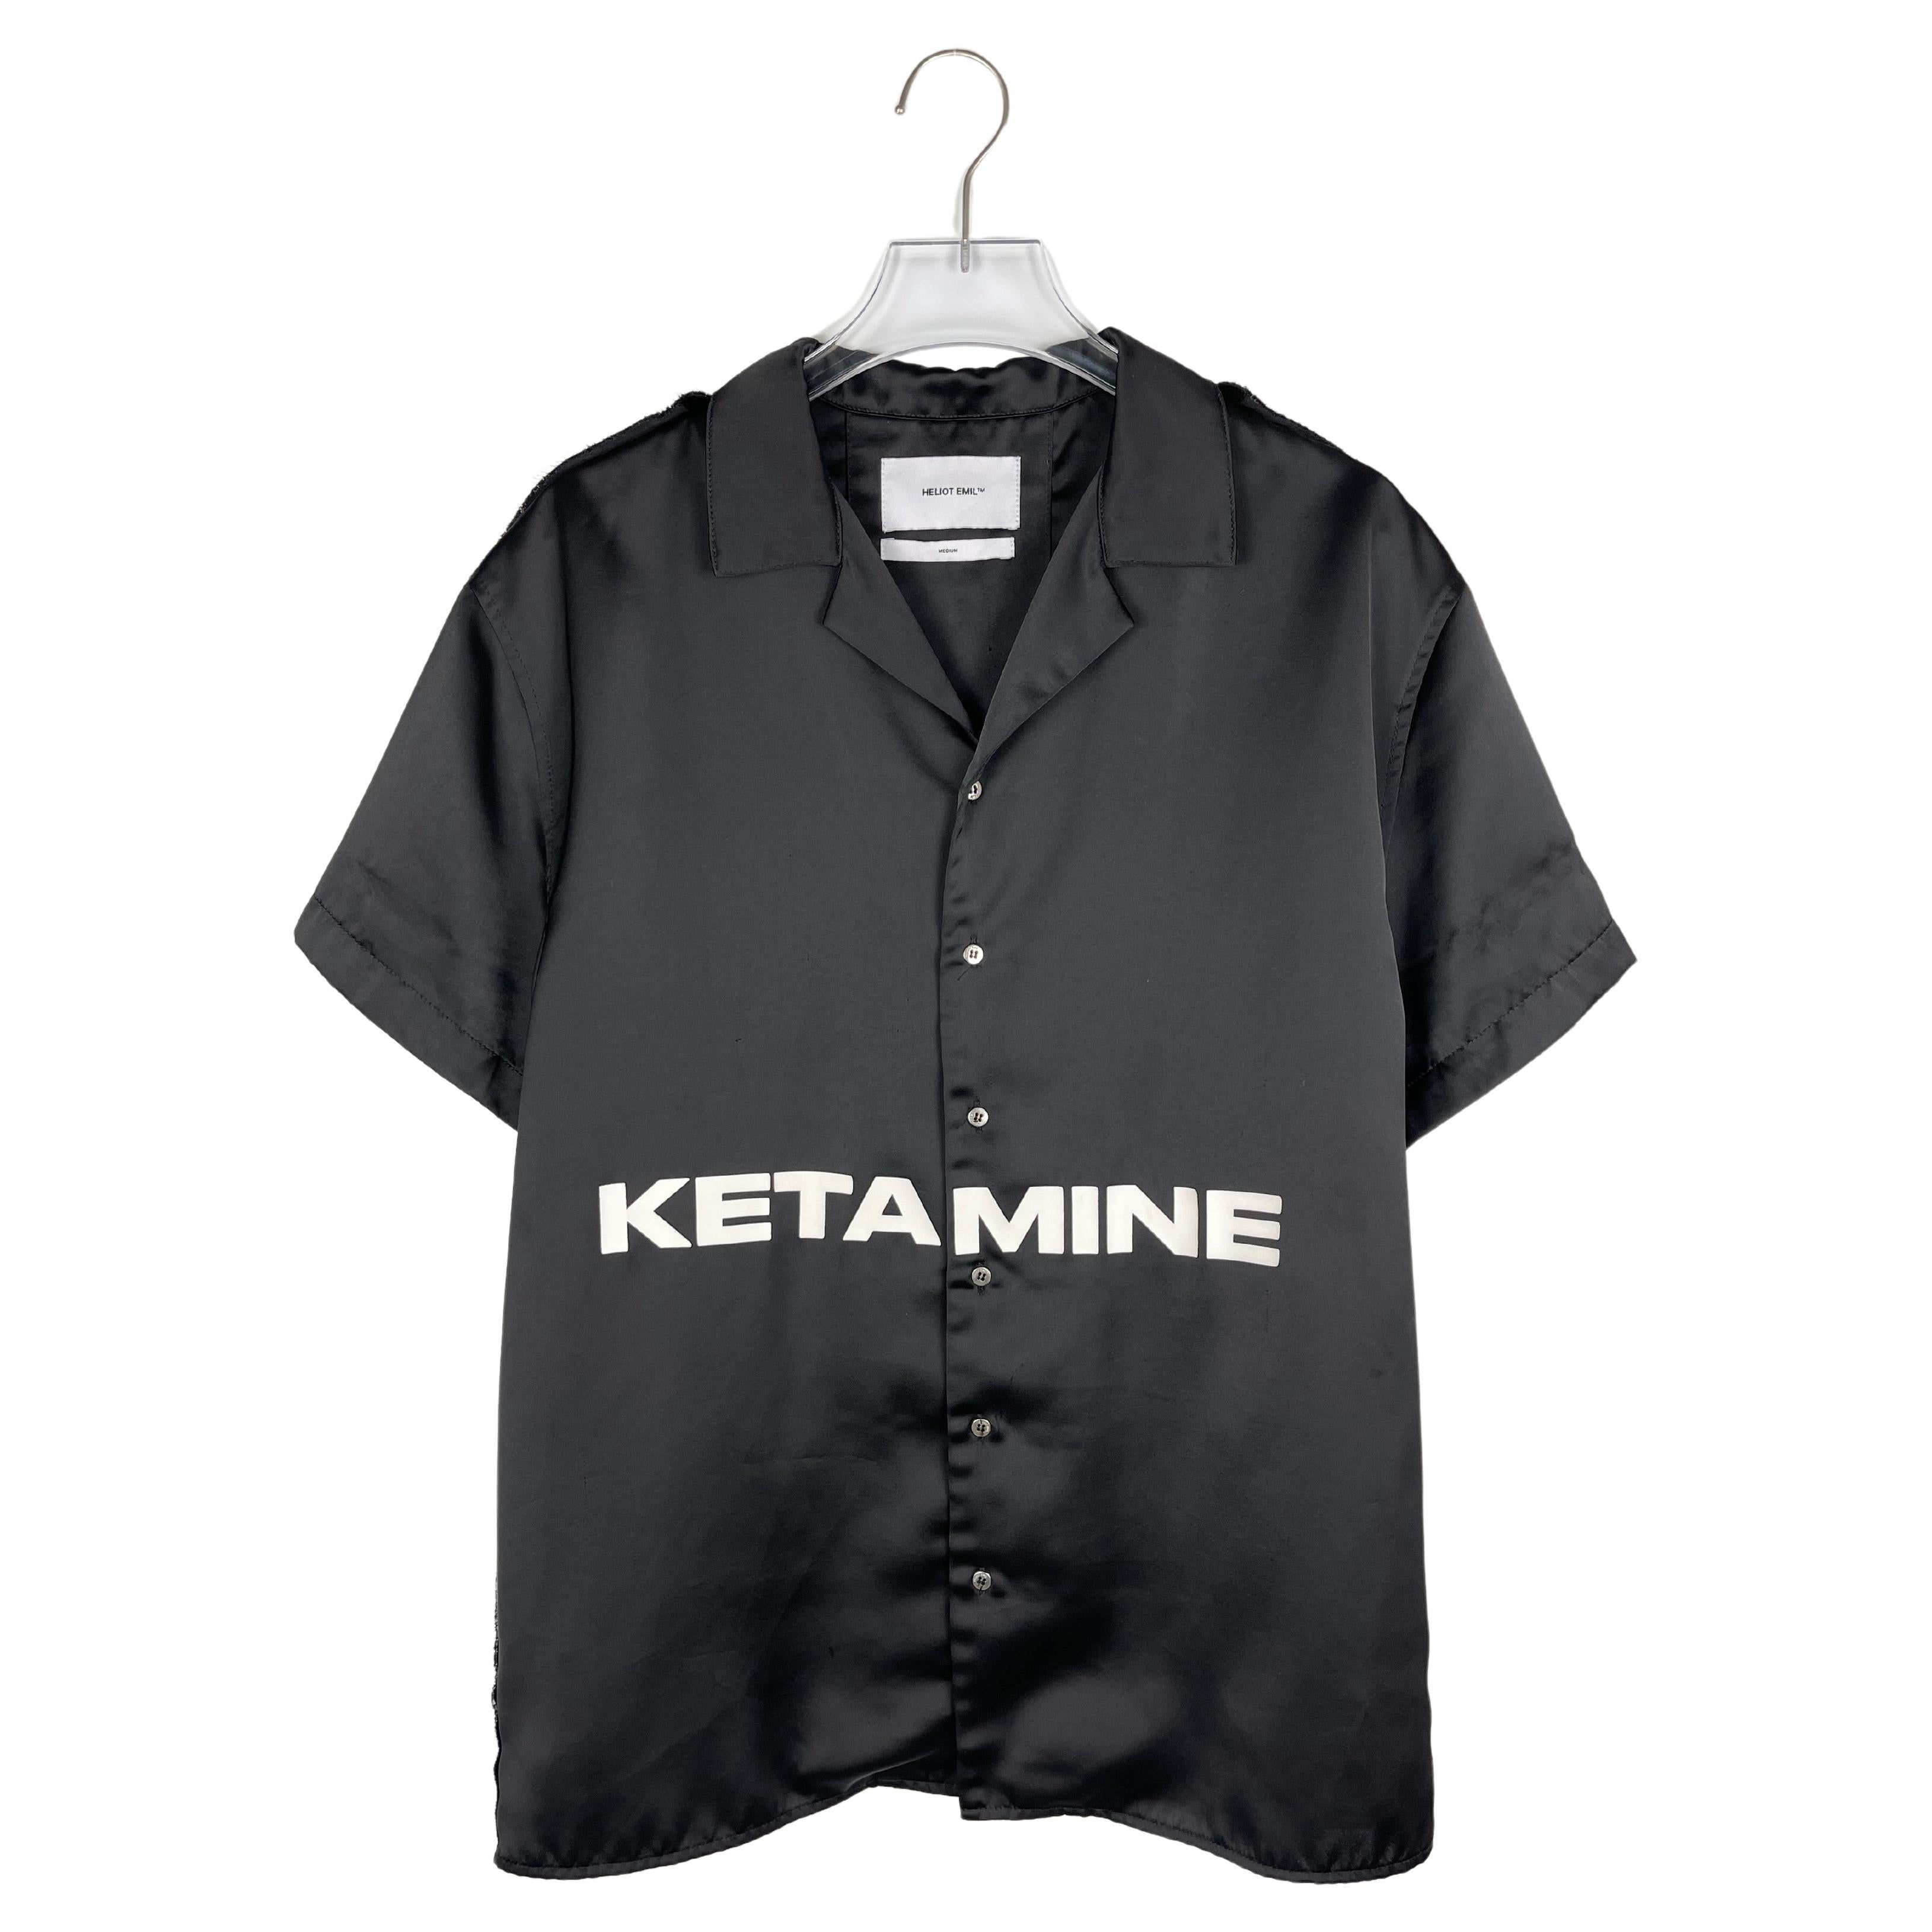 Heliot Emil 2018 Stapled Ketamine Shirt For Sale